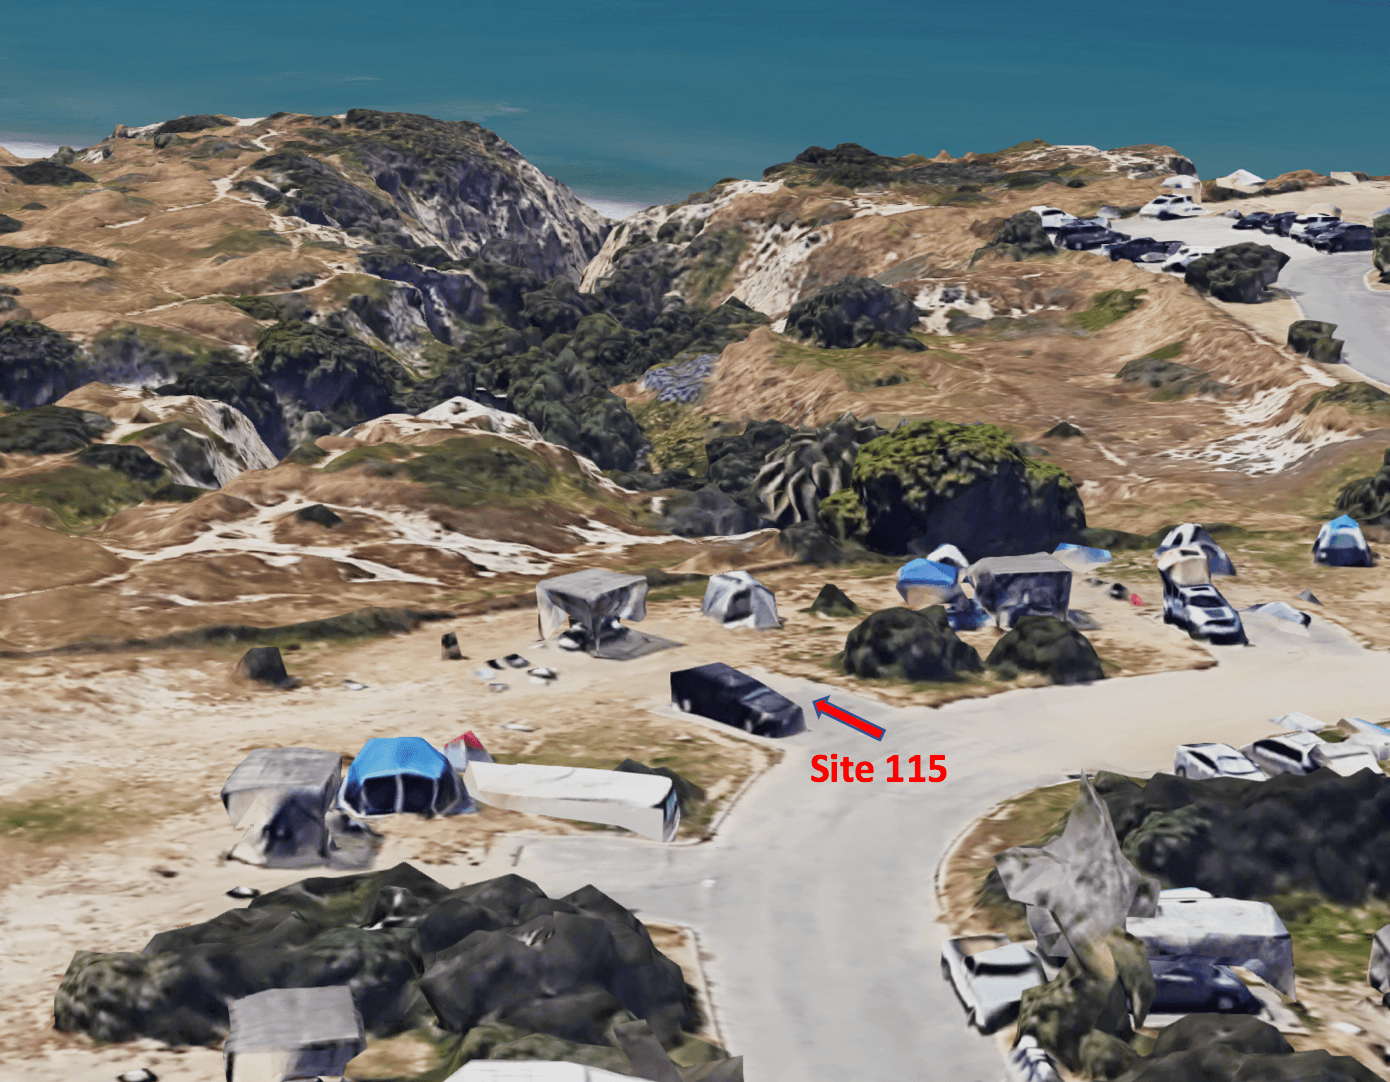 San Clemente State Beach - Campsite #115